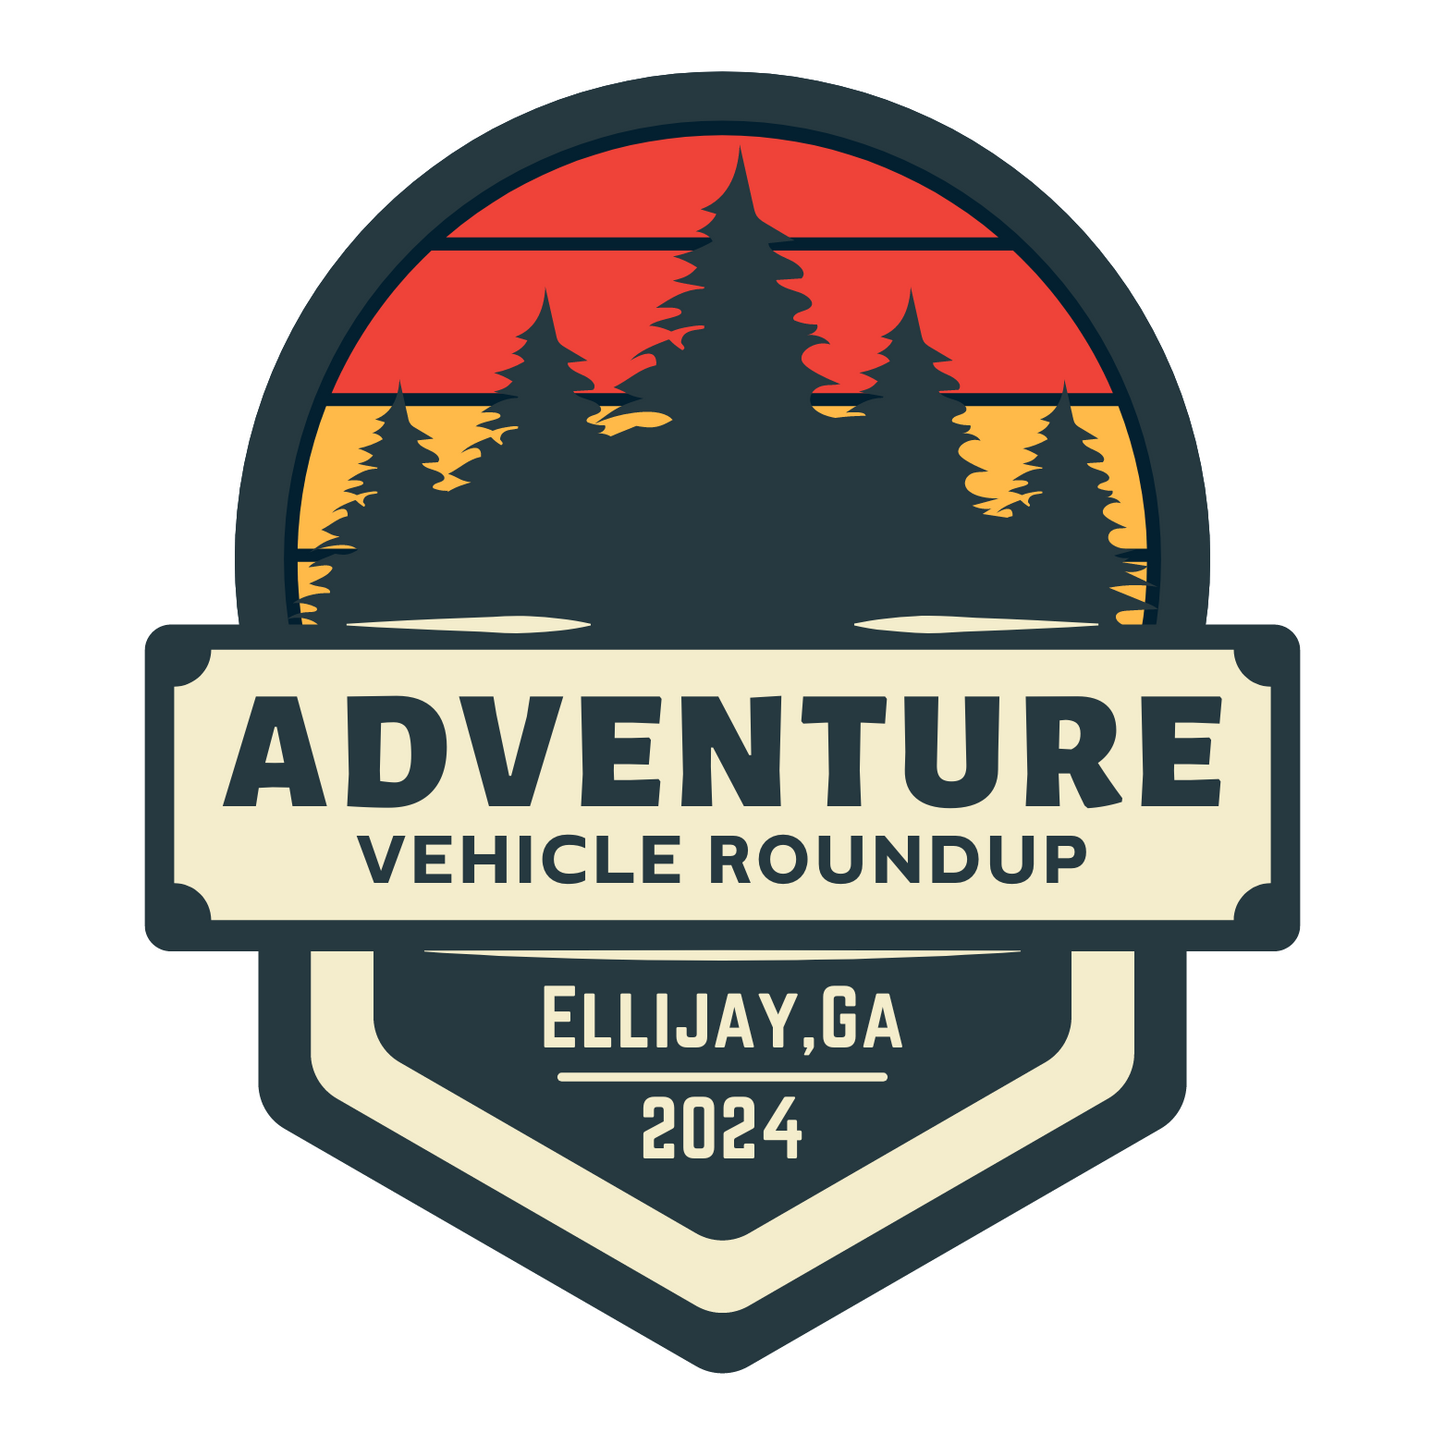 Adventure Vehicle Roundup - Vendor Space